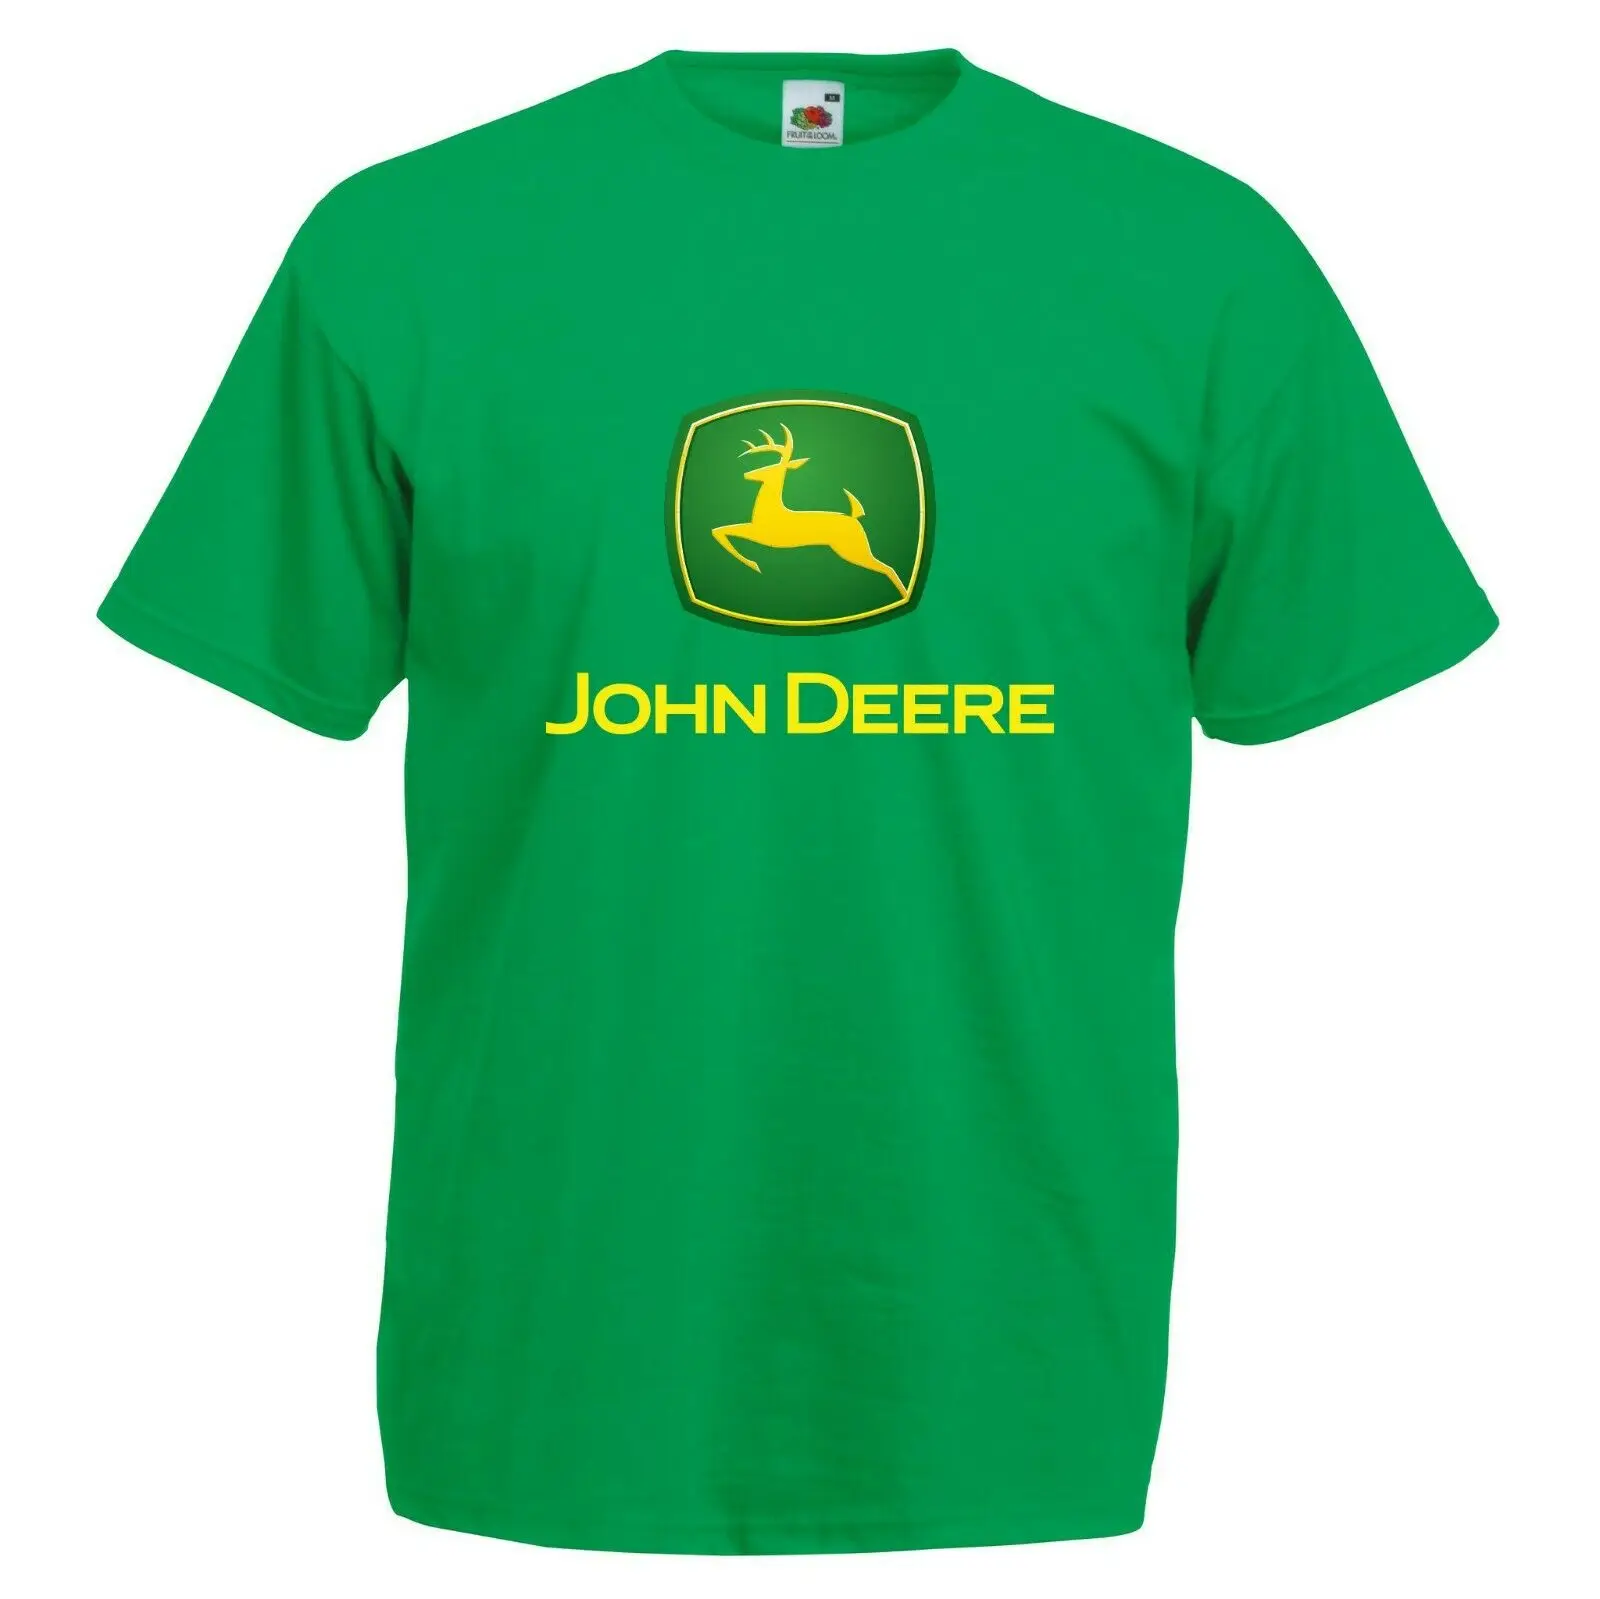 John Deere T-Shirt Classic Tractor Enthusiast Farming Etc VARIOUS SIZES 